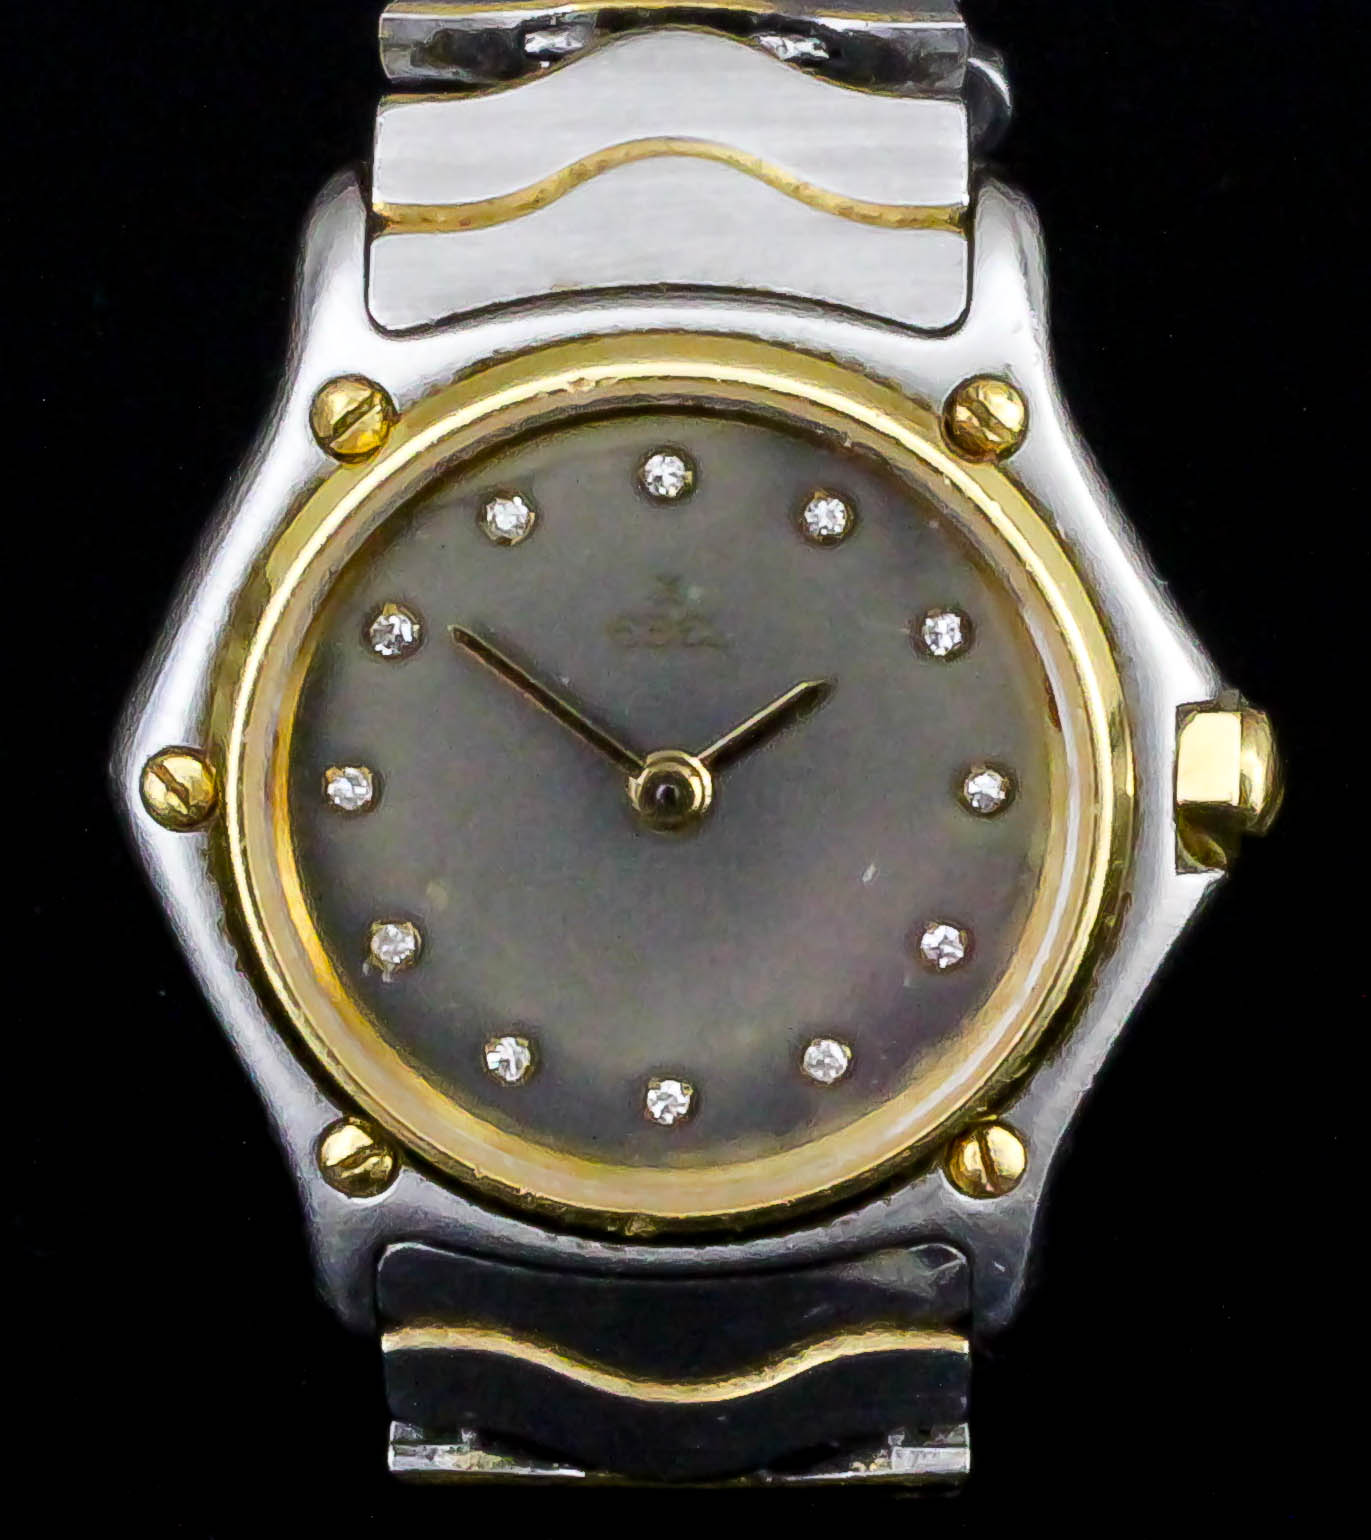 A lady's Ebel bi-metallic quartz wristwatch, Model No. 411493, the smoke coloured dial with